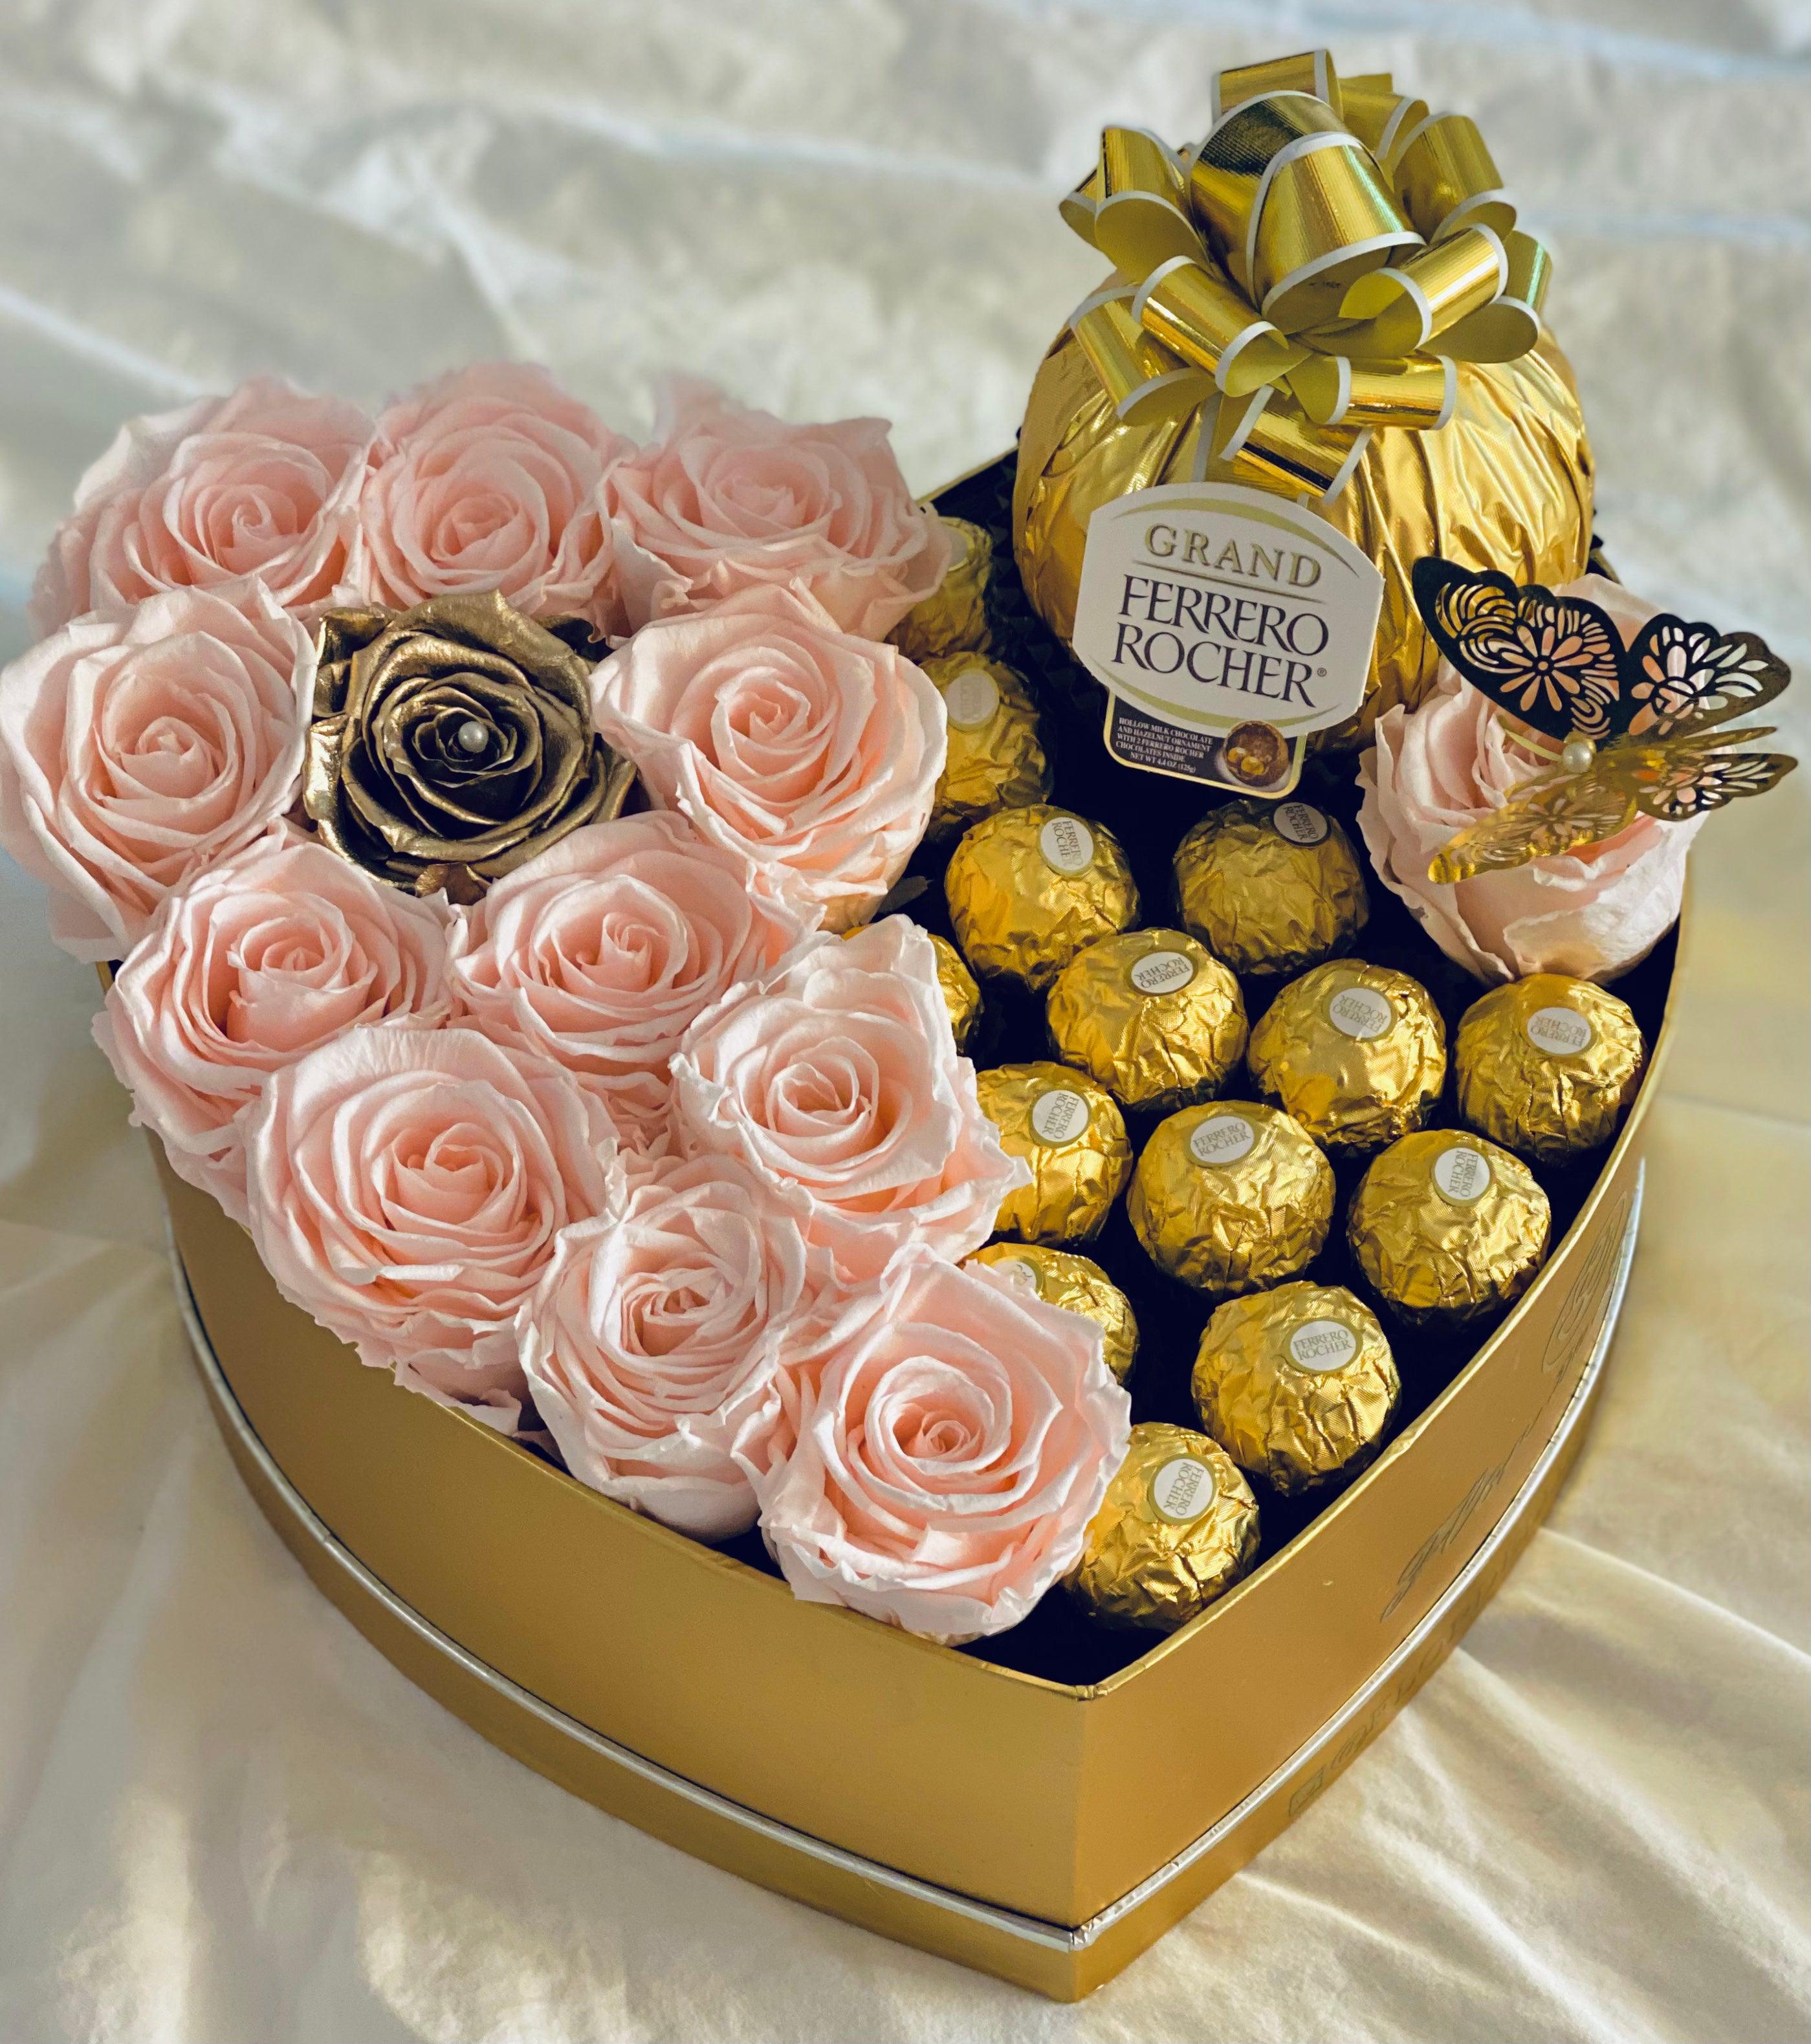 Medium Heart Gift Box - Preserved Roses & Ferrero Combo